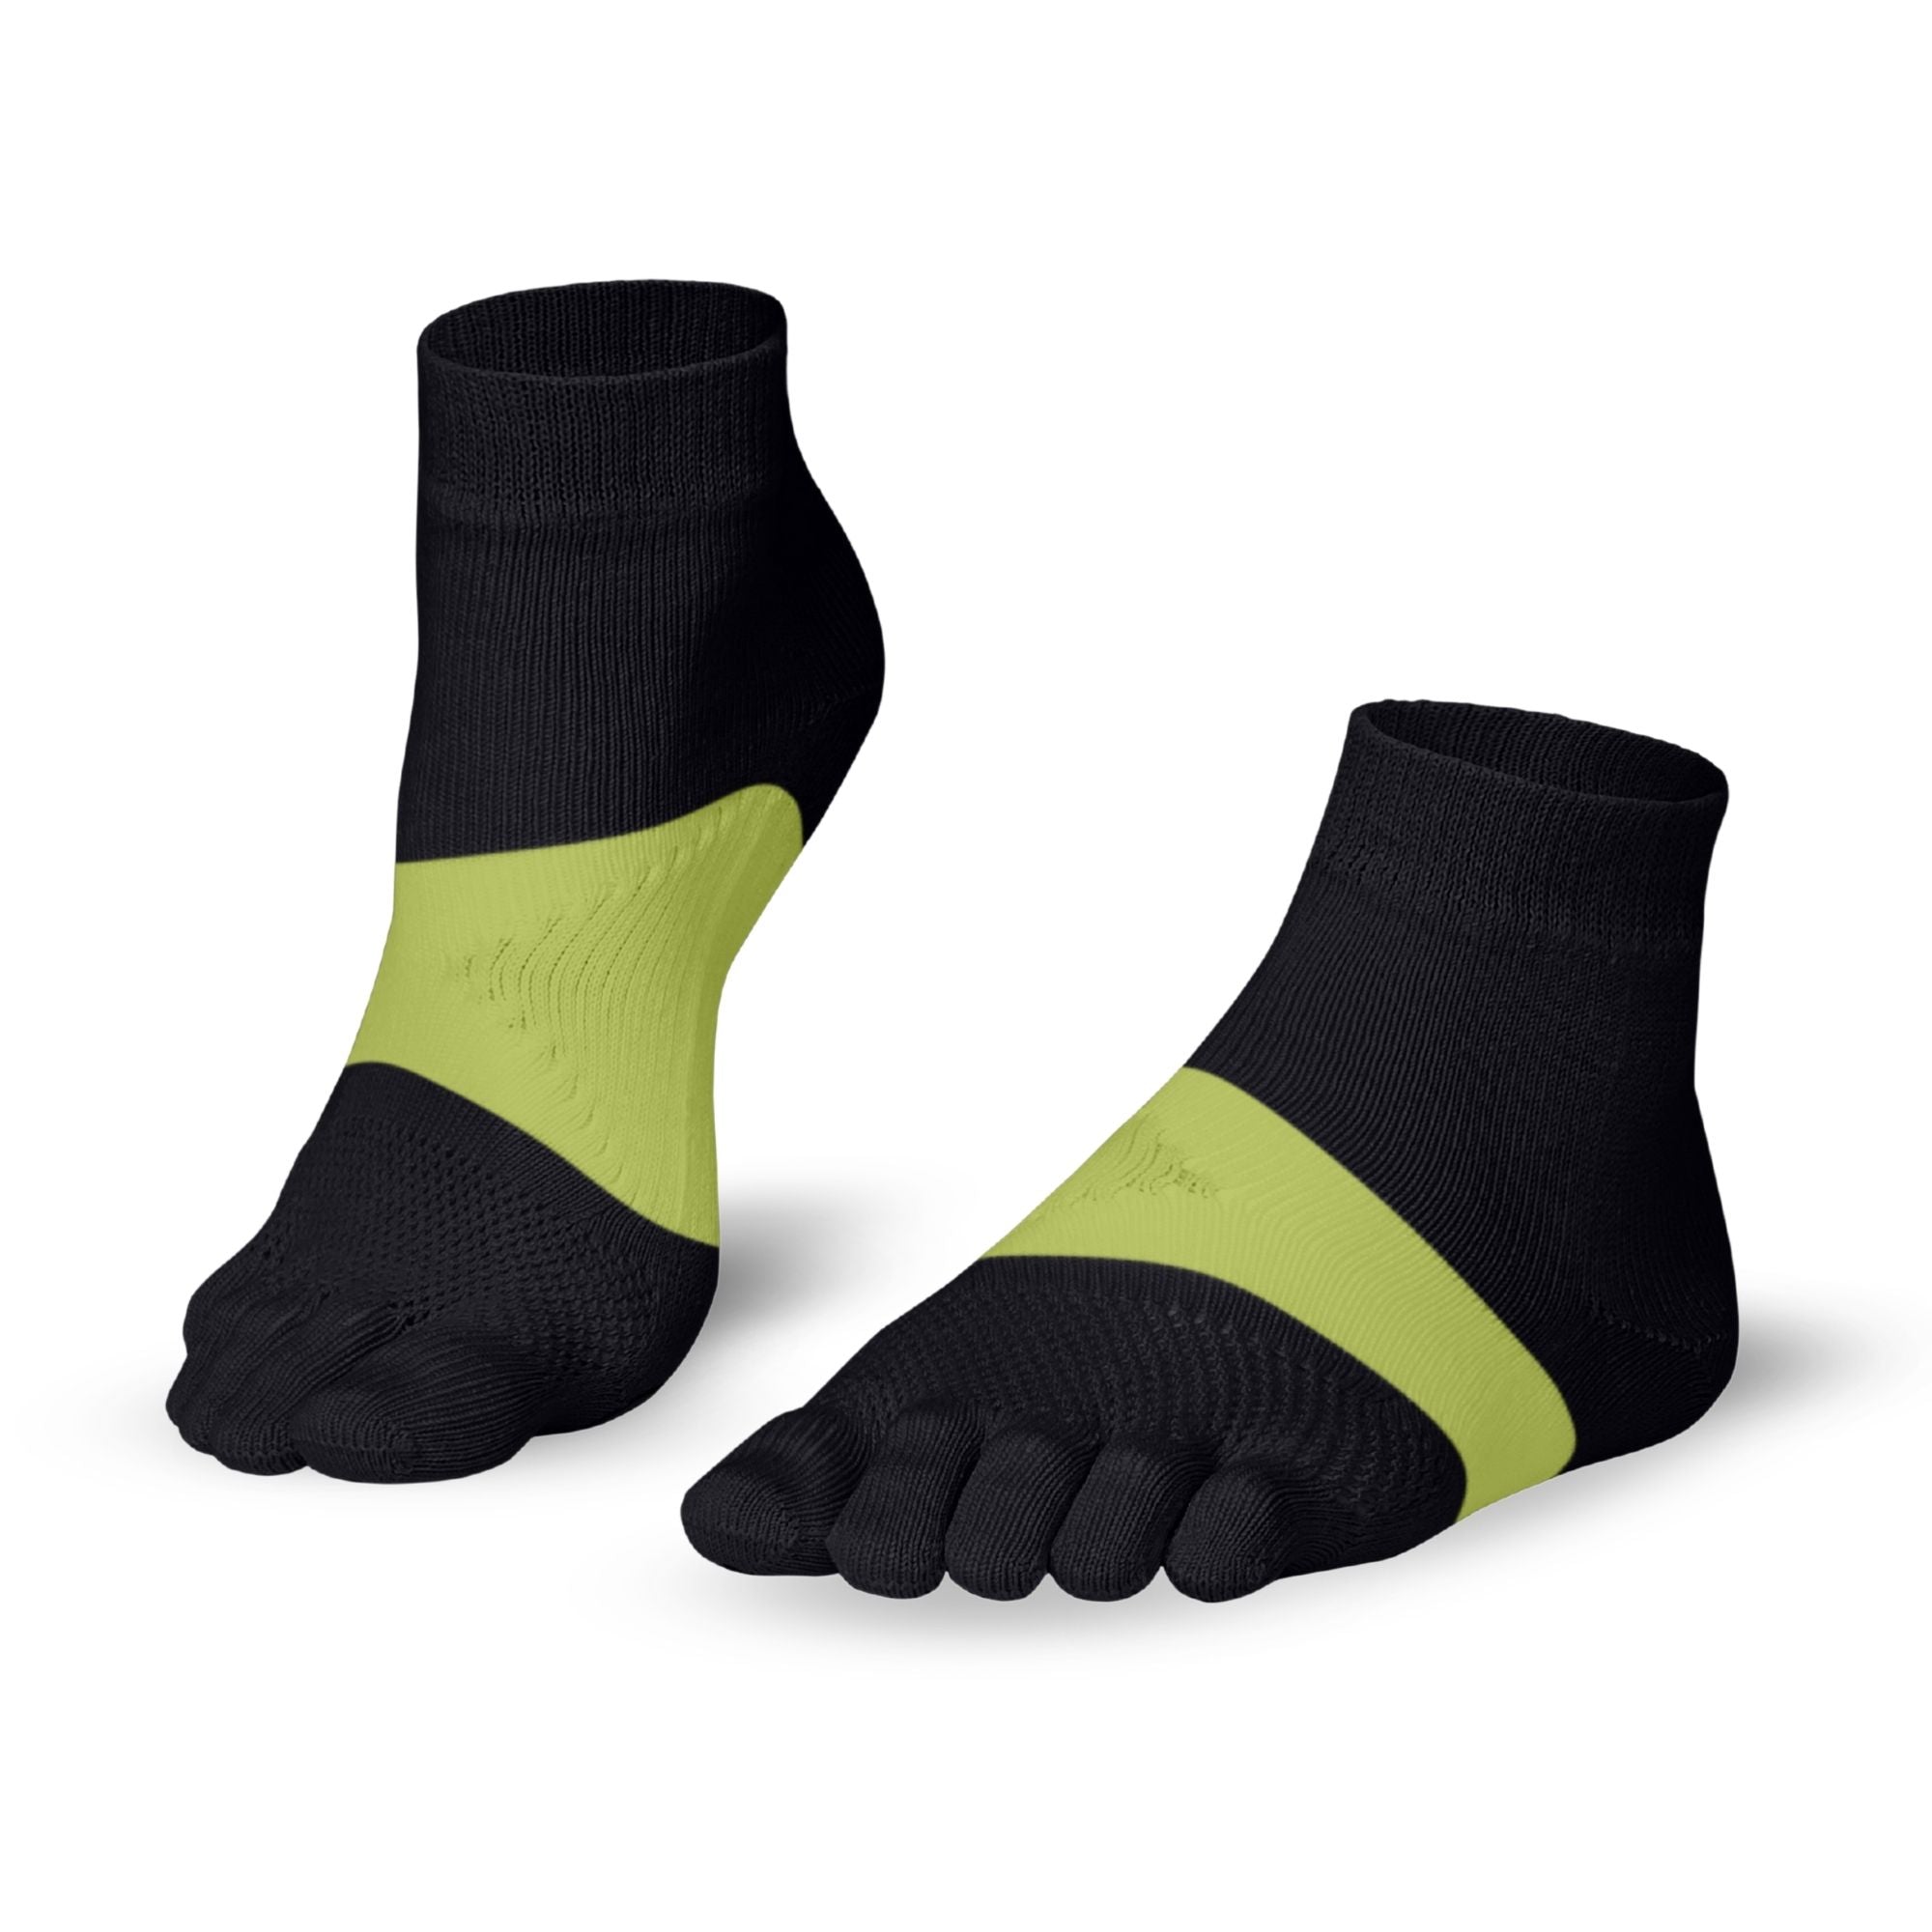 knitido Toe socks 36 41 anti slip sports socks running socks men men socks  black - Knitido®.